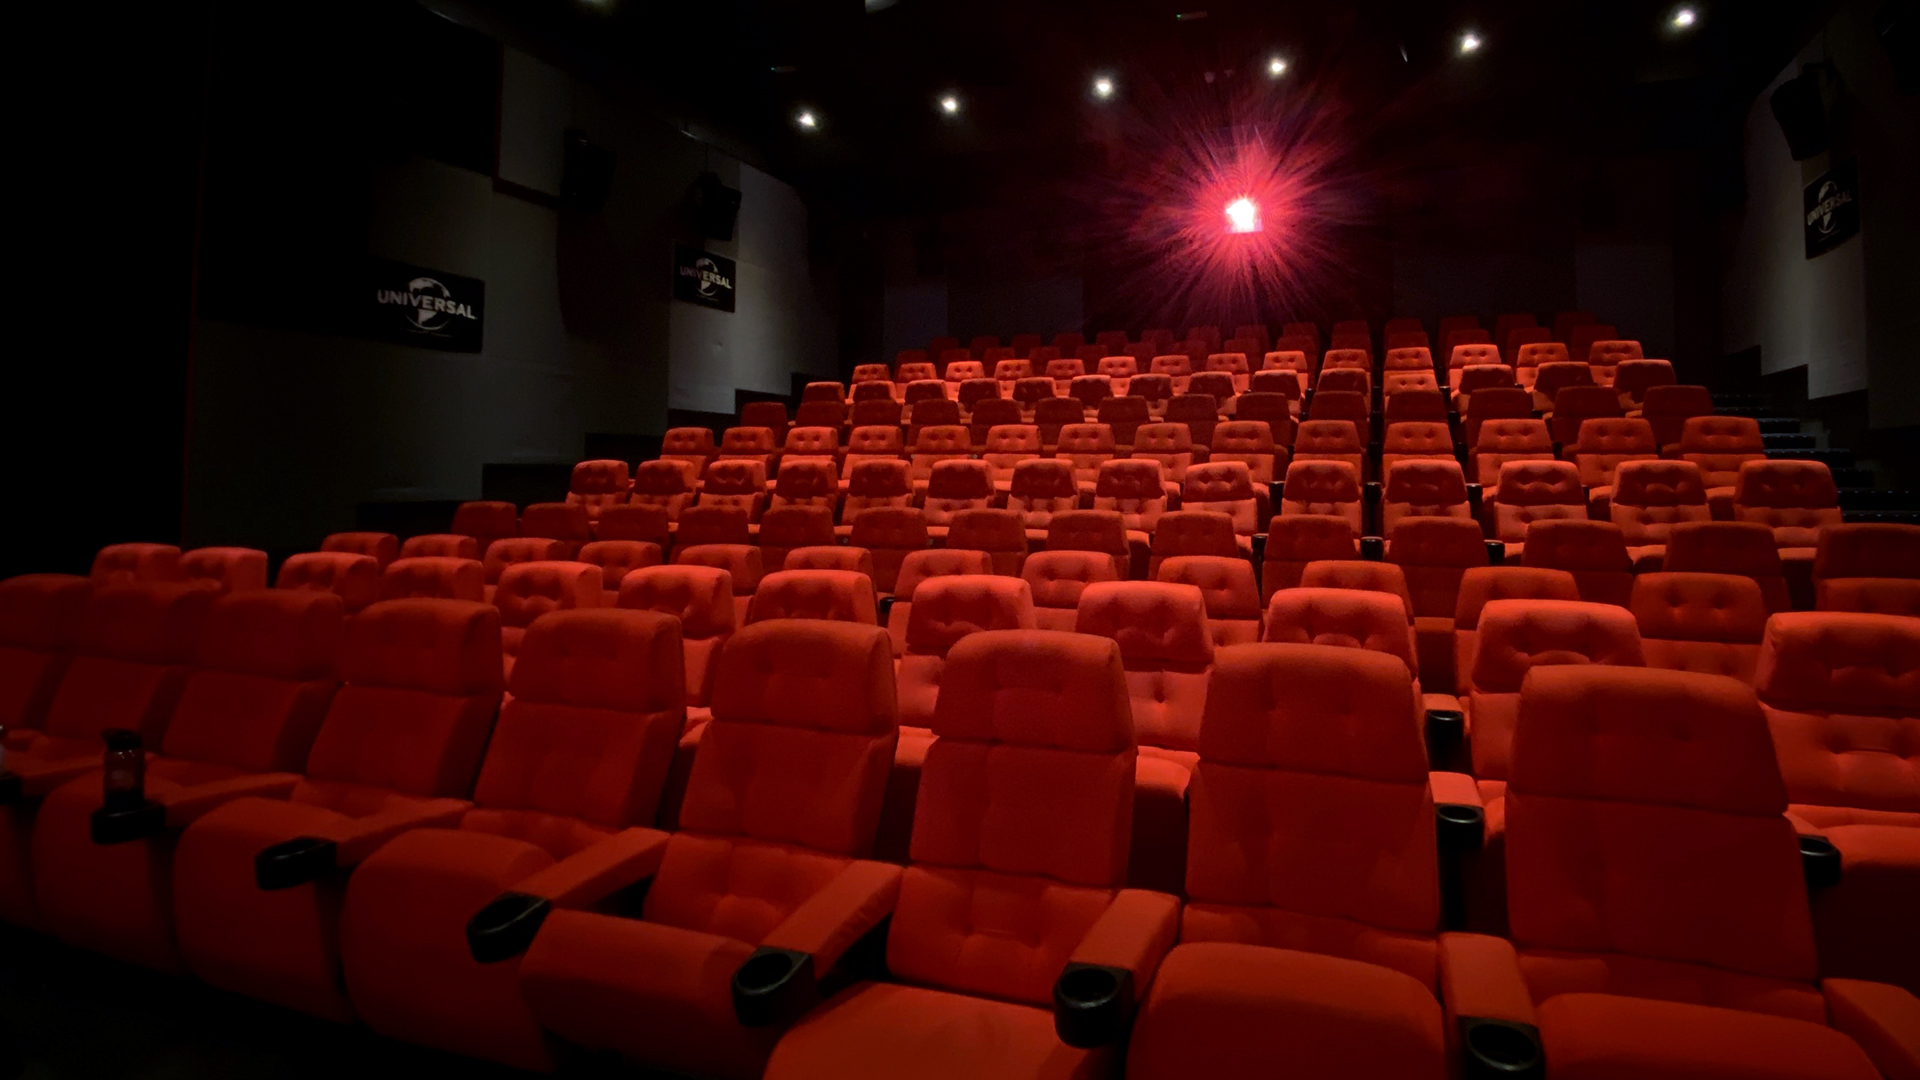 Inside NFTS cinema